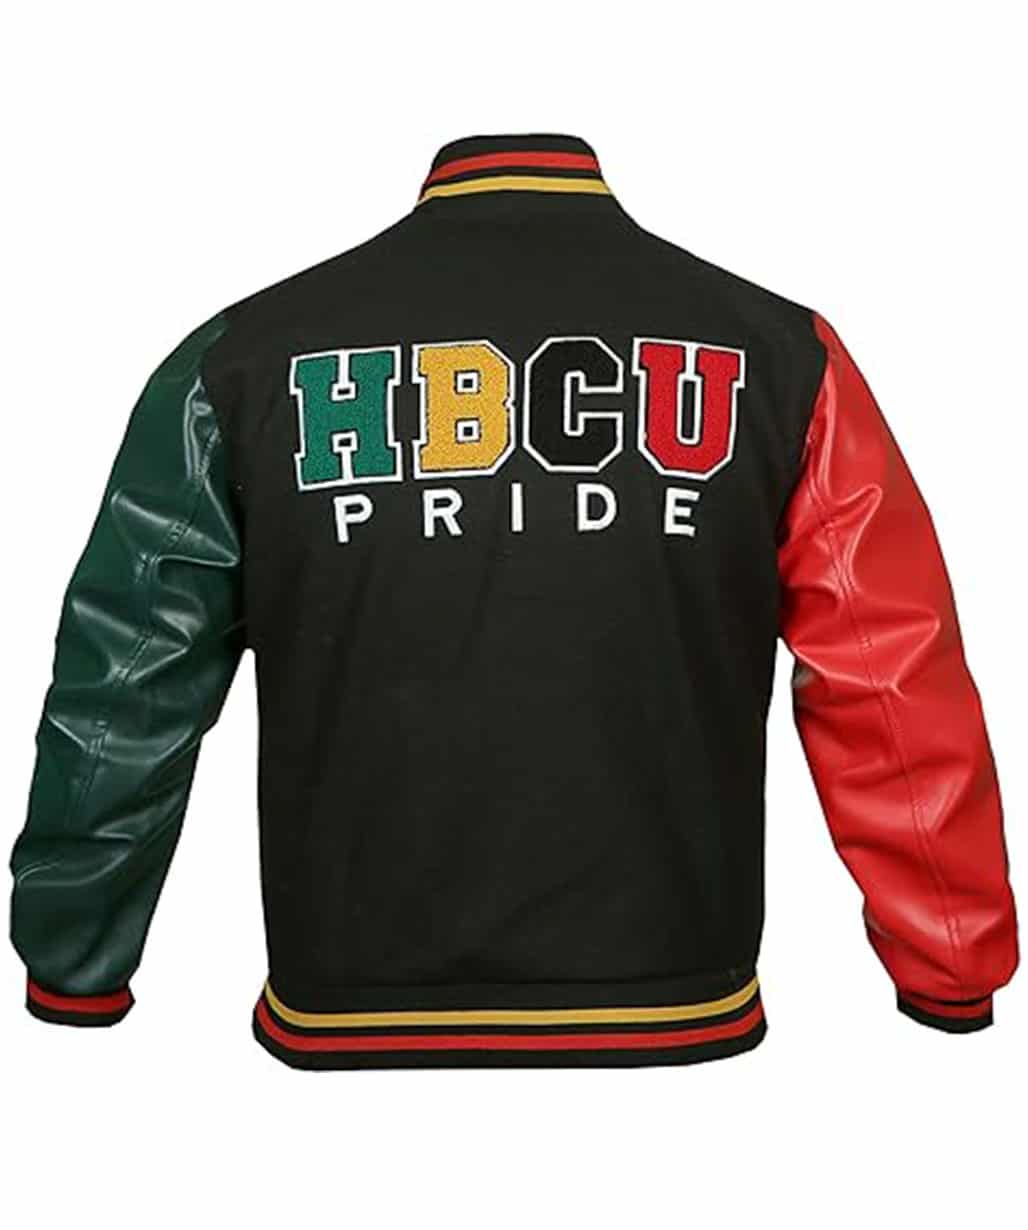 donovan-mitchell-hbcu-pride-letterman-jacket-online